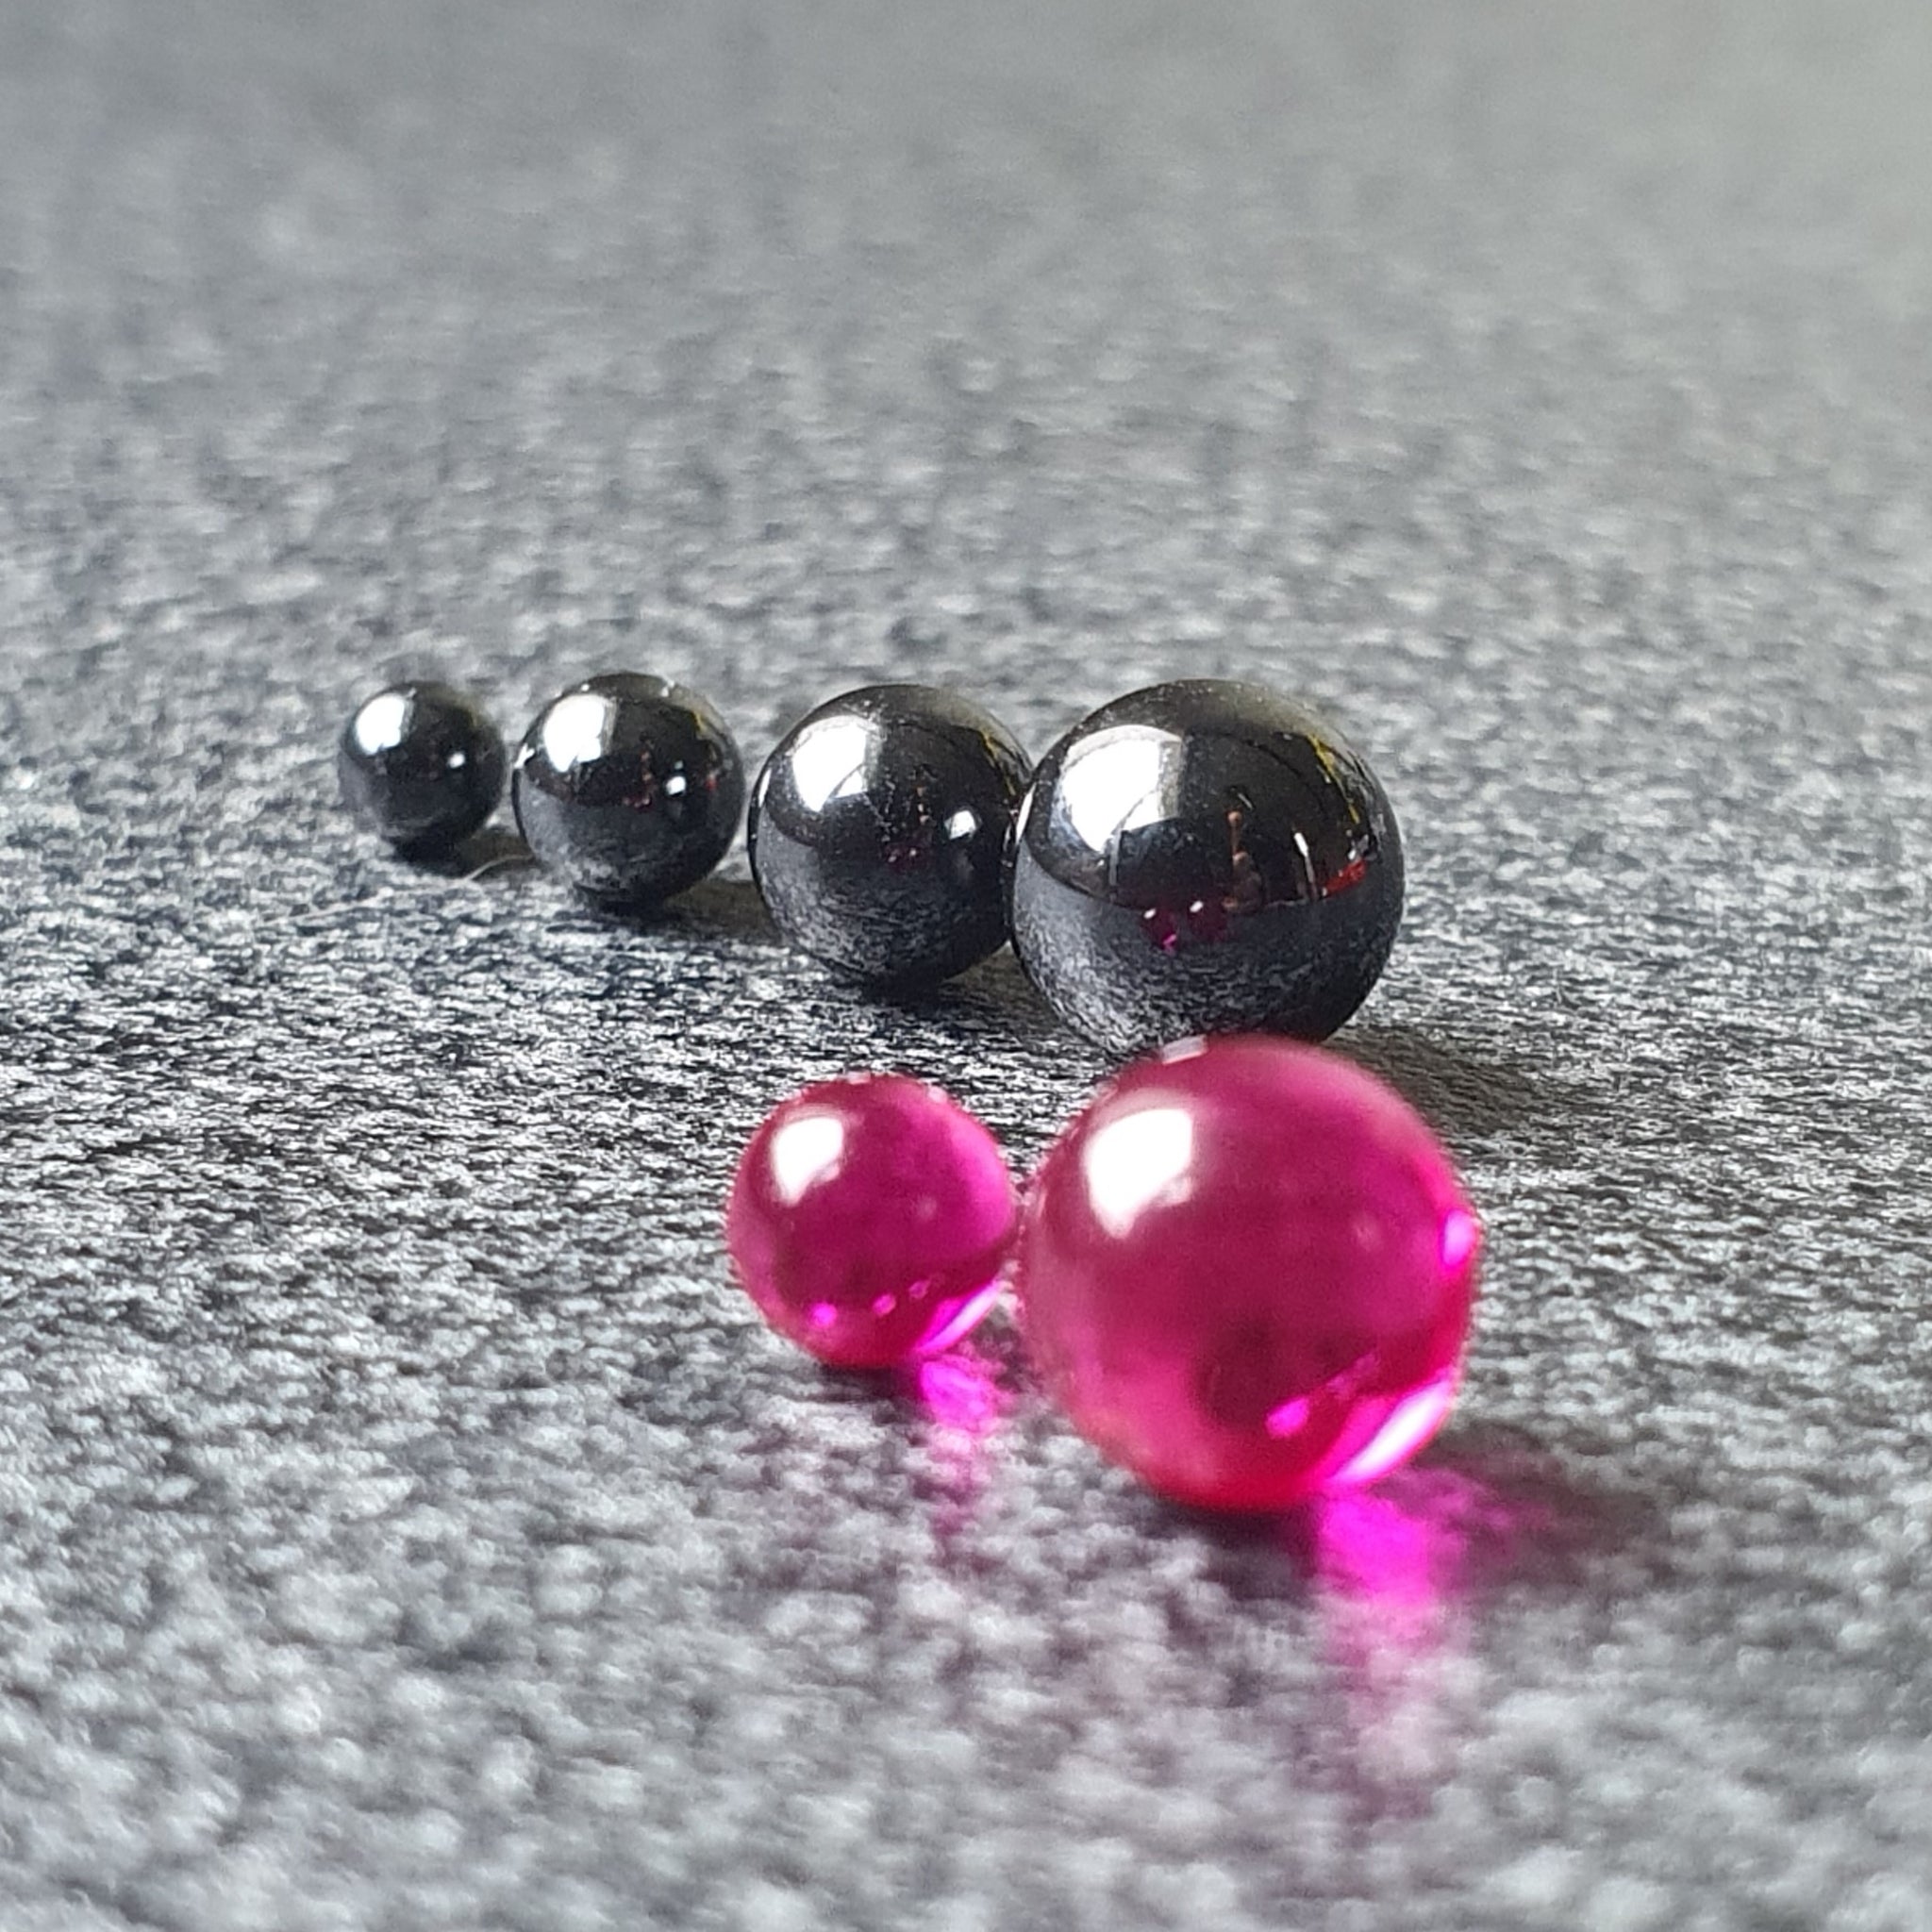 Terp Pearls - Terp Balls - Ruby or Silicon Carbide SiC